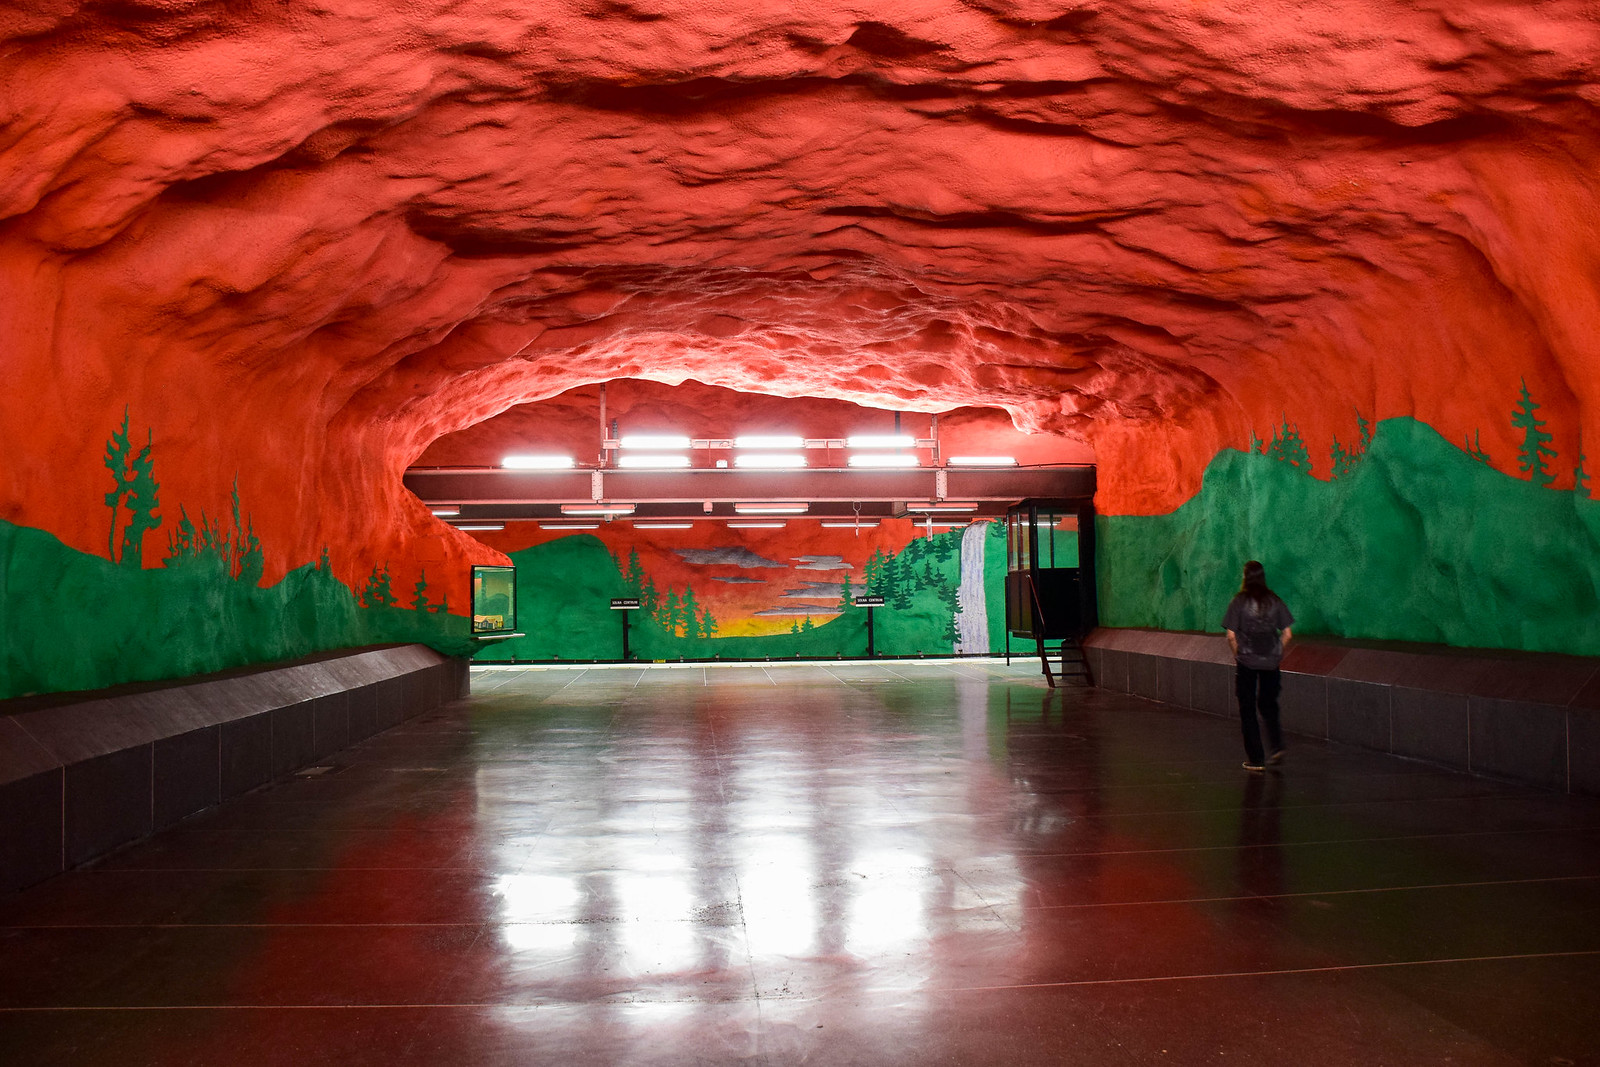 Stockholm subway art